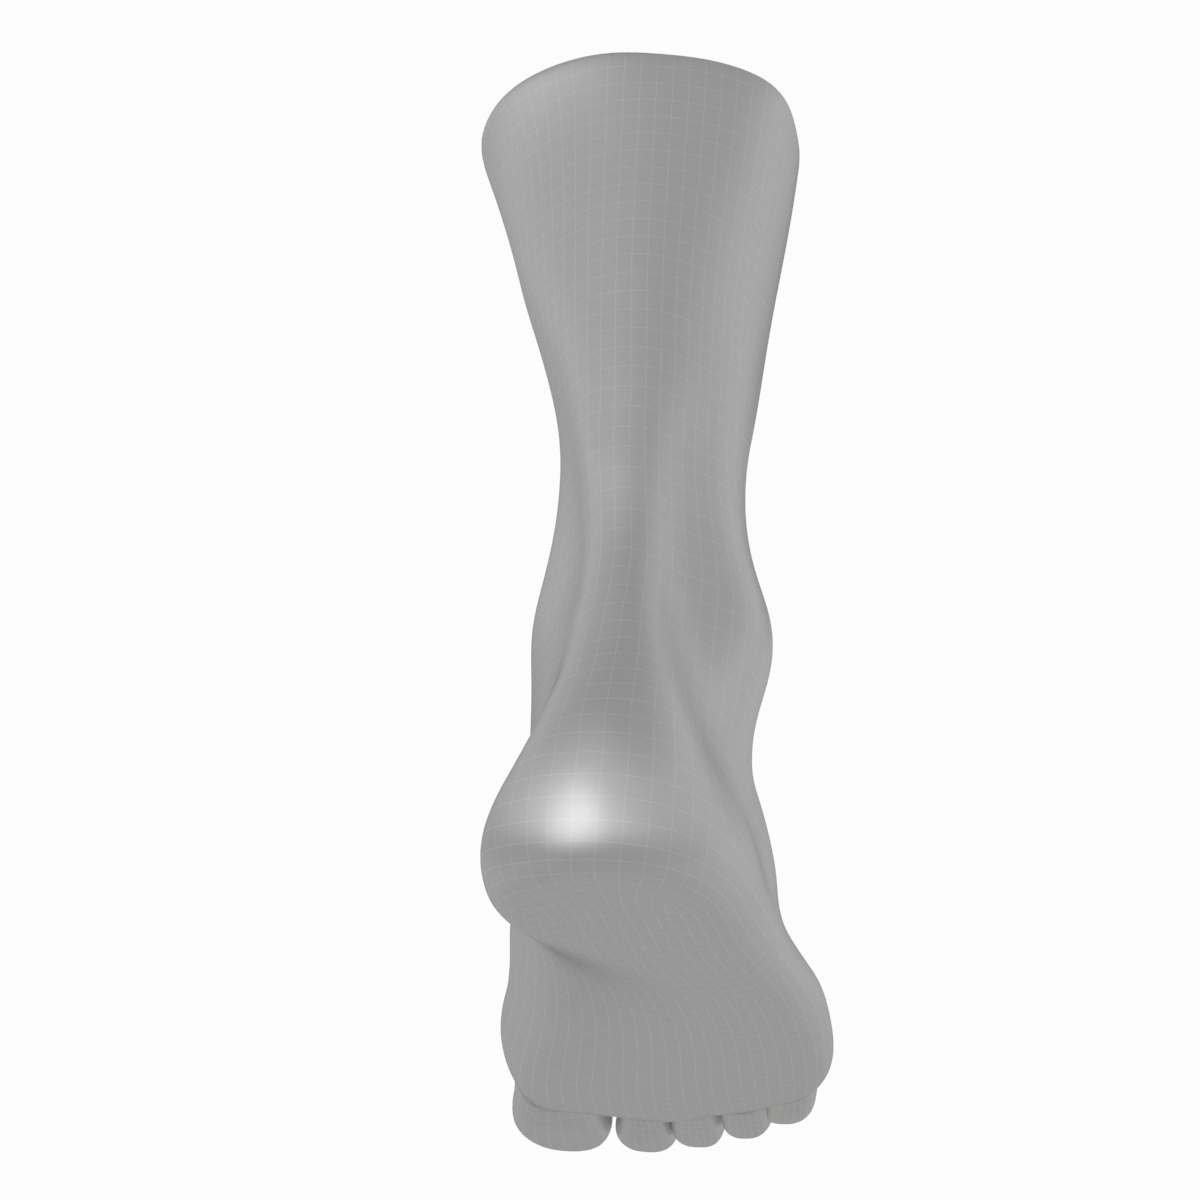 Human male feet based 3D model - TurboSquid 1470752